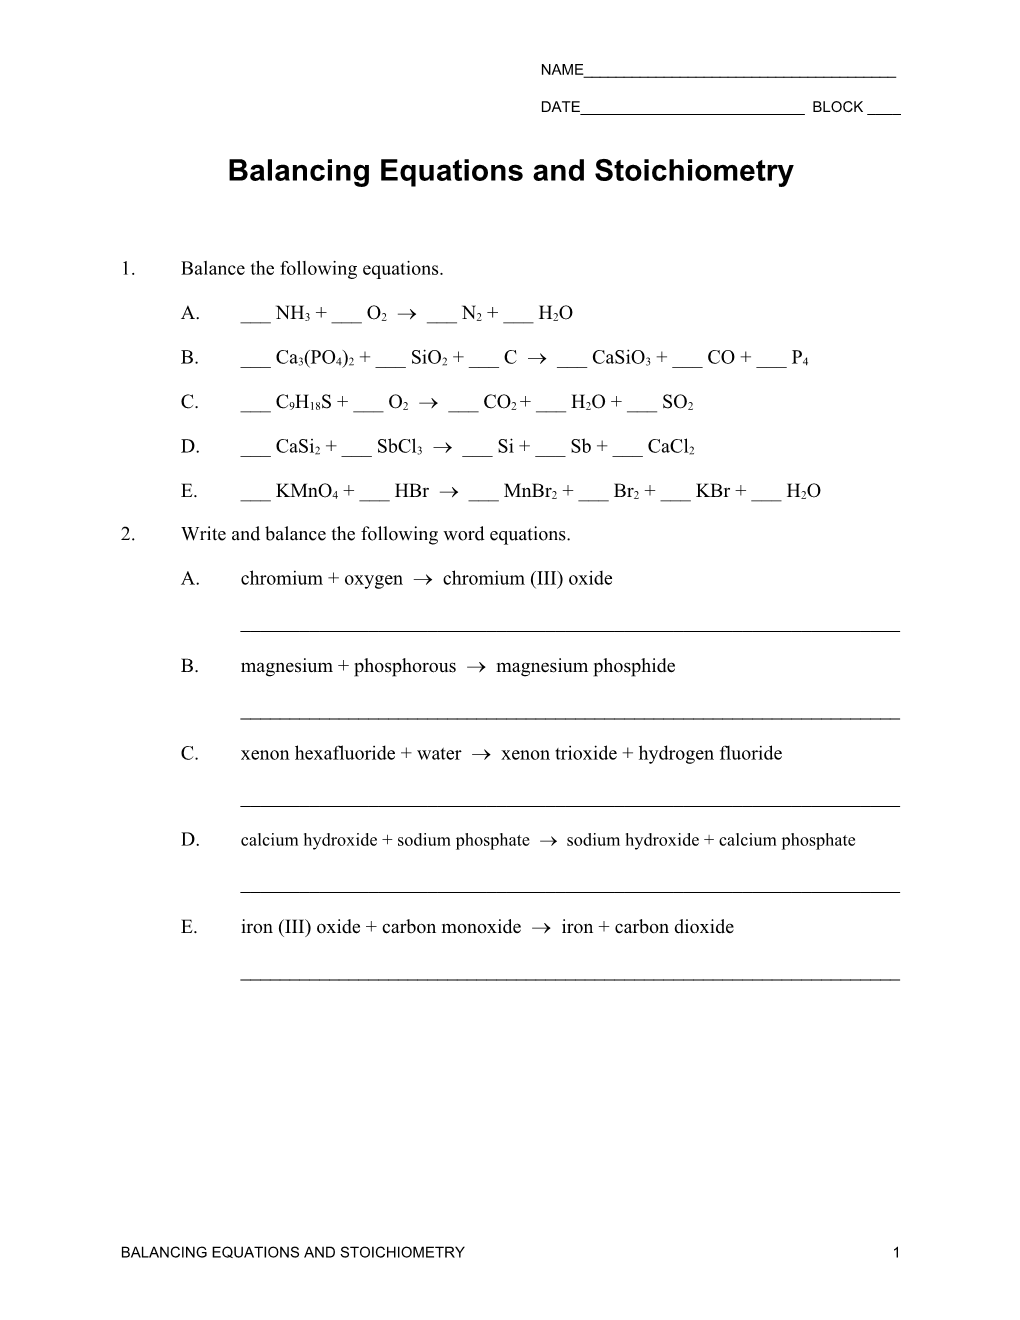 Balancing Equations and Stoichiometry